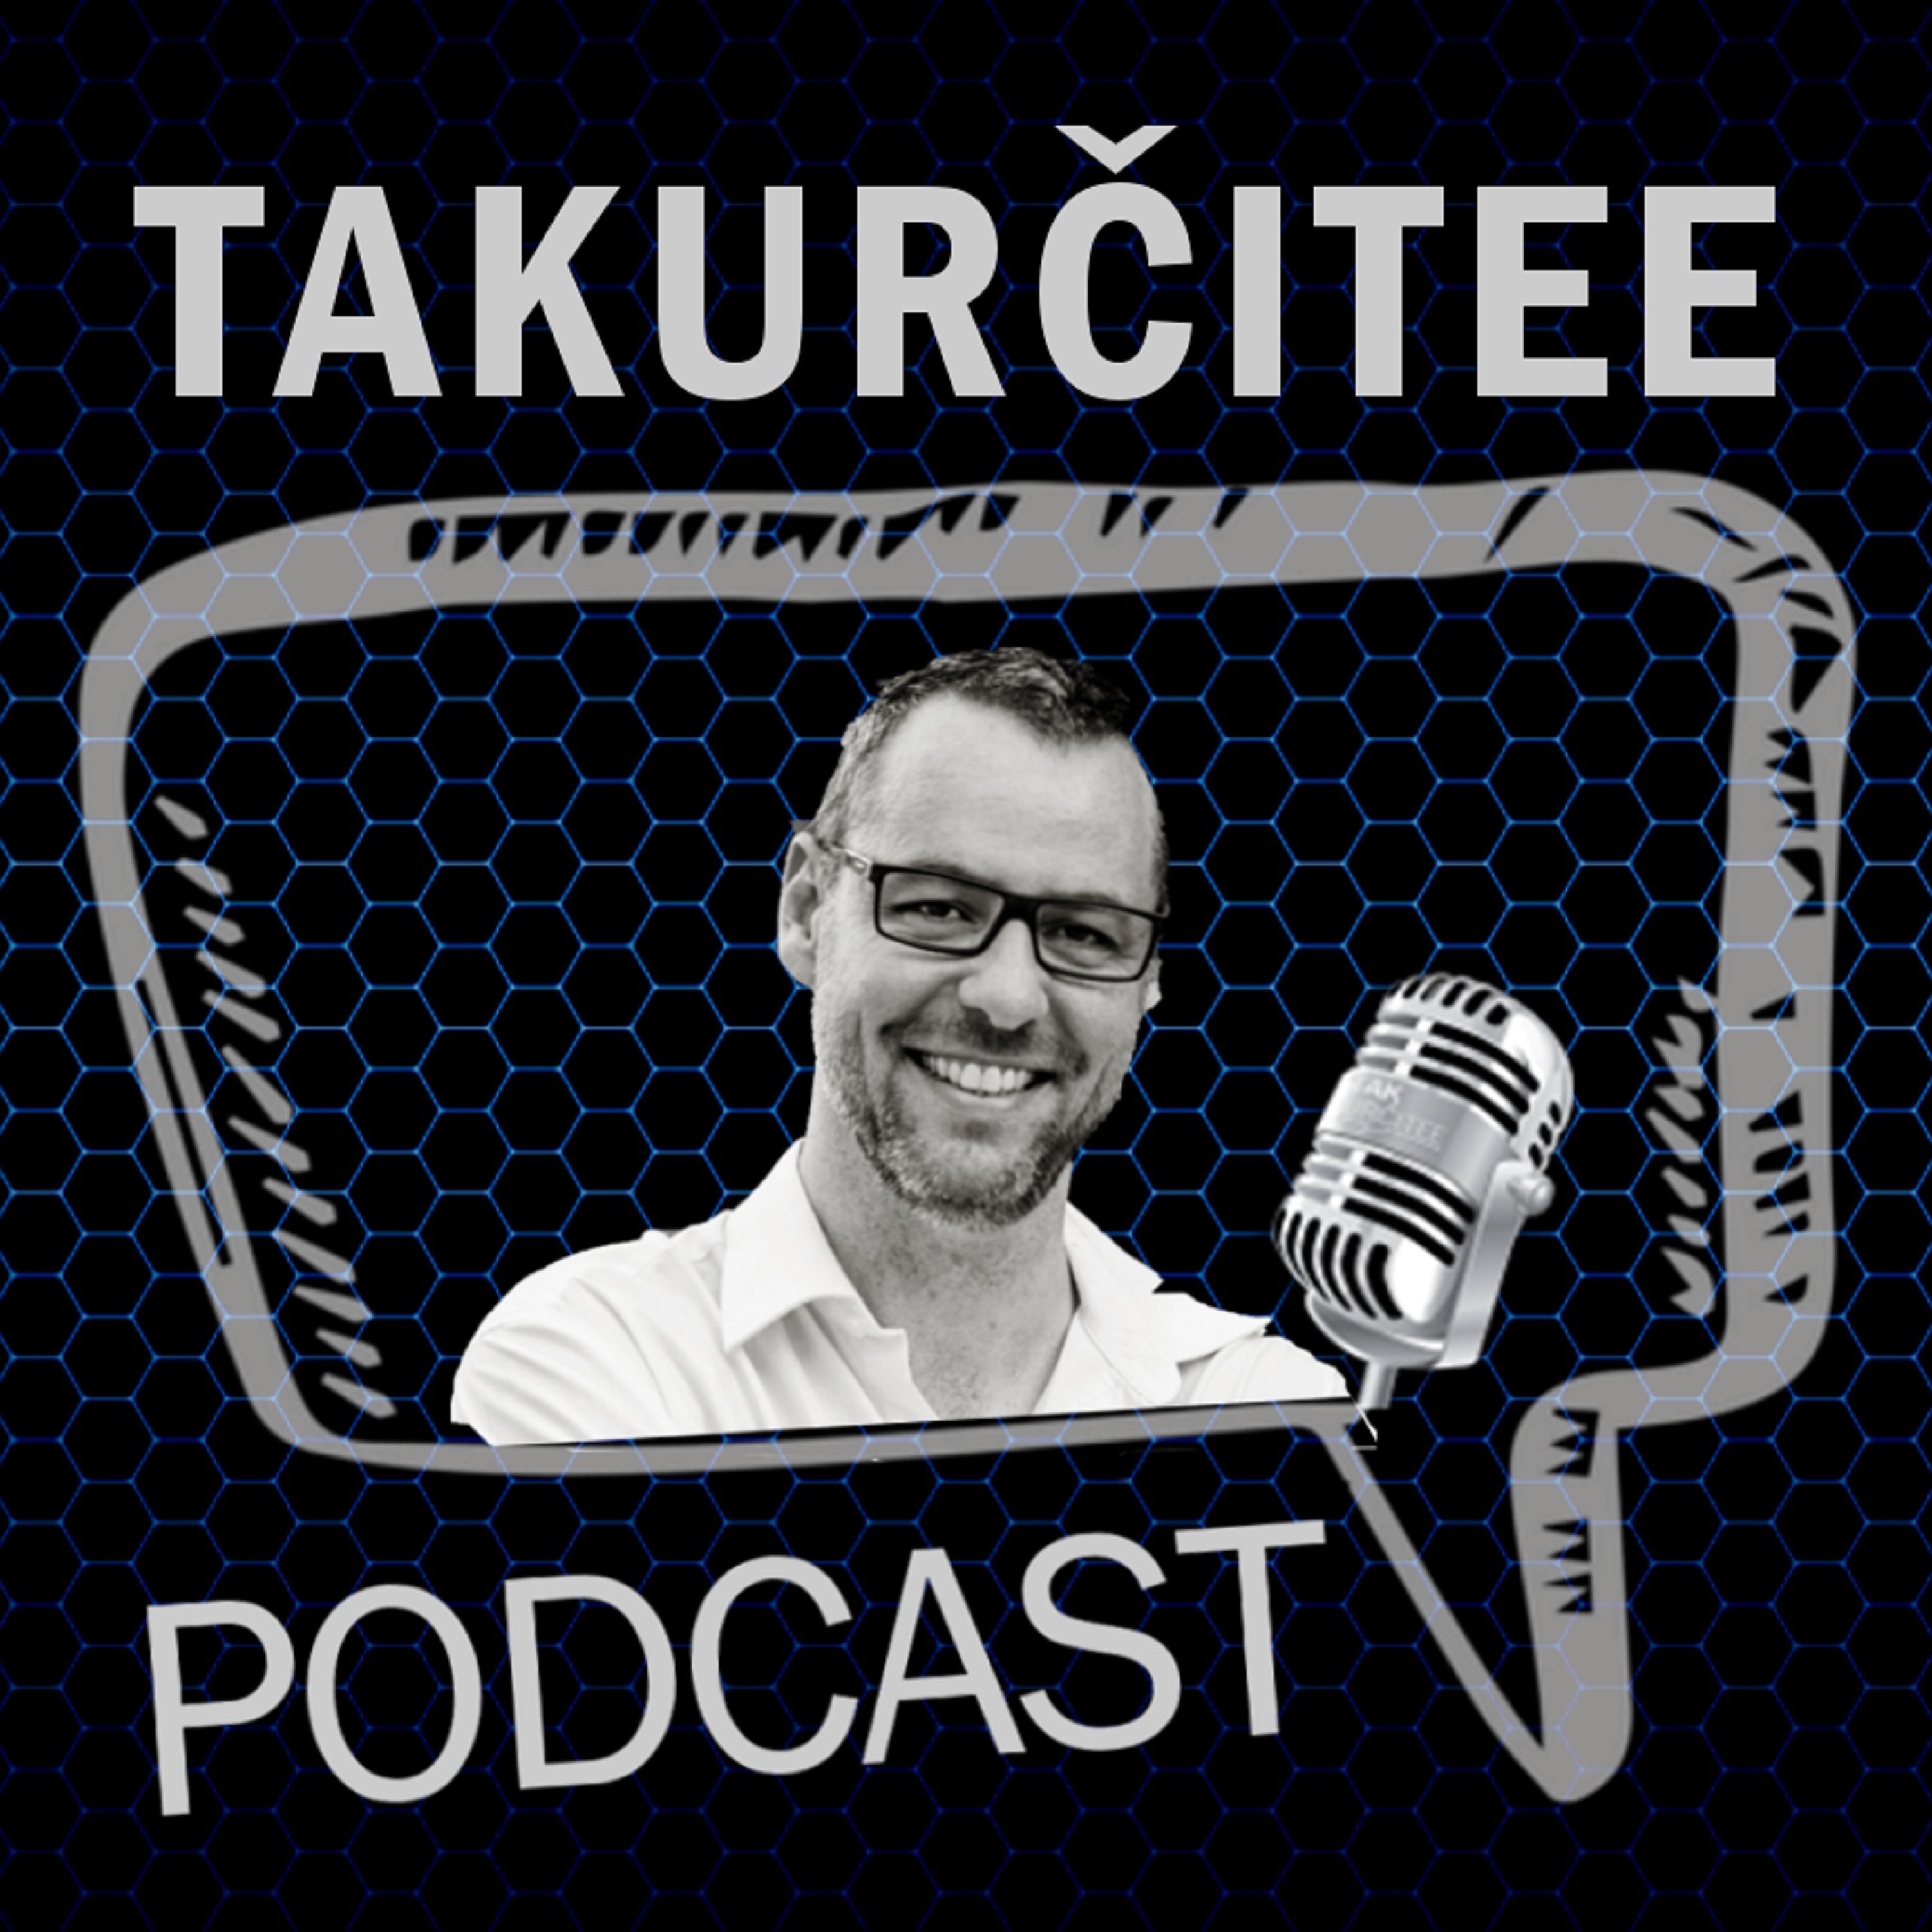 TakUrčitee Podcast, Ep. 46: NBA a slovenské basketbalové príbehy